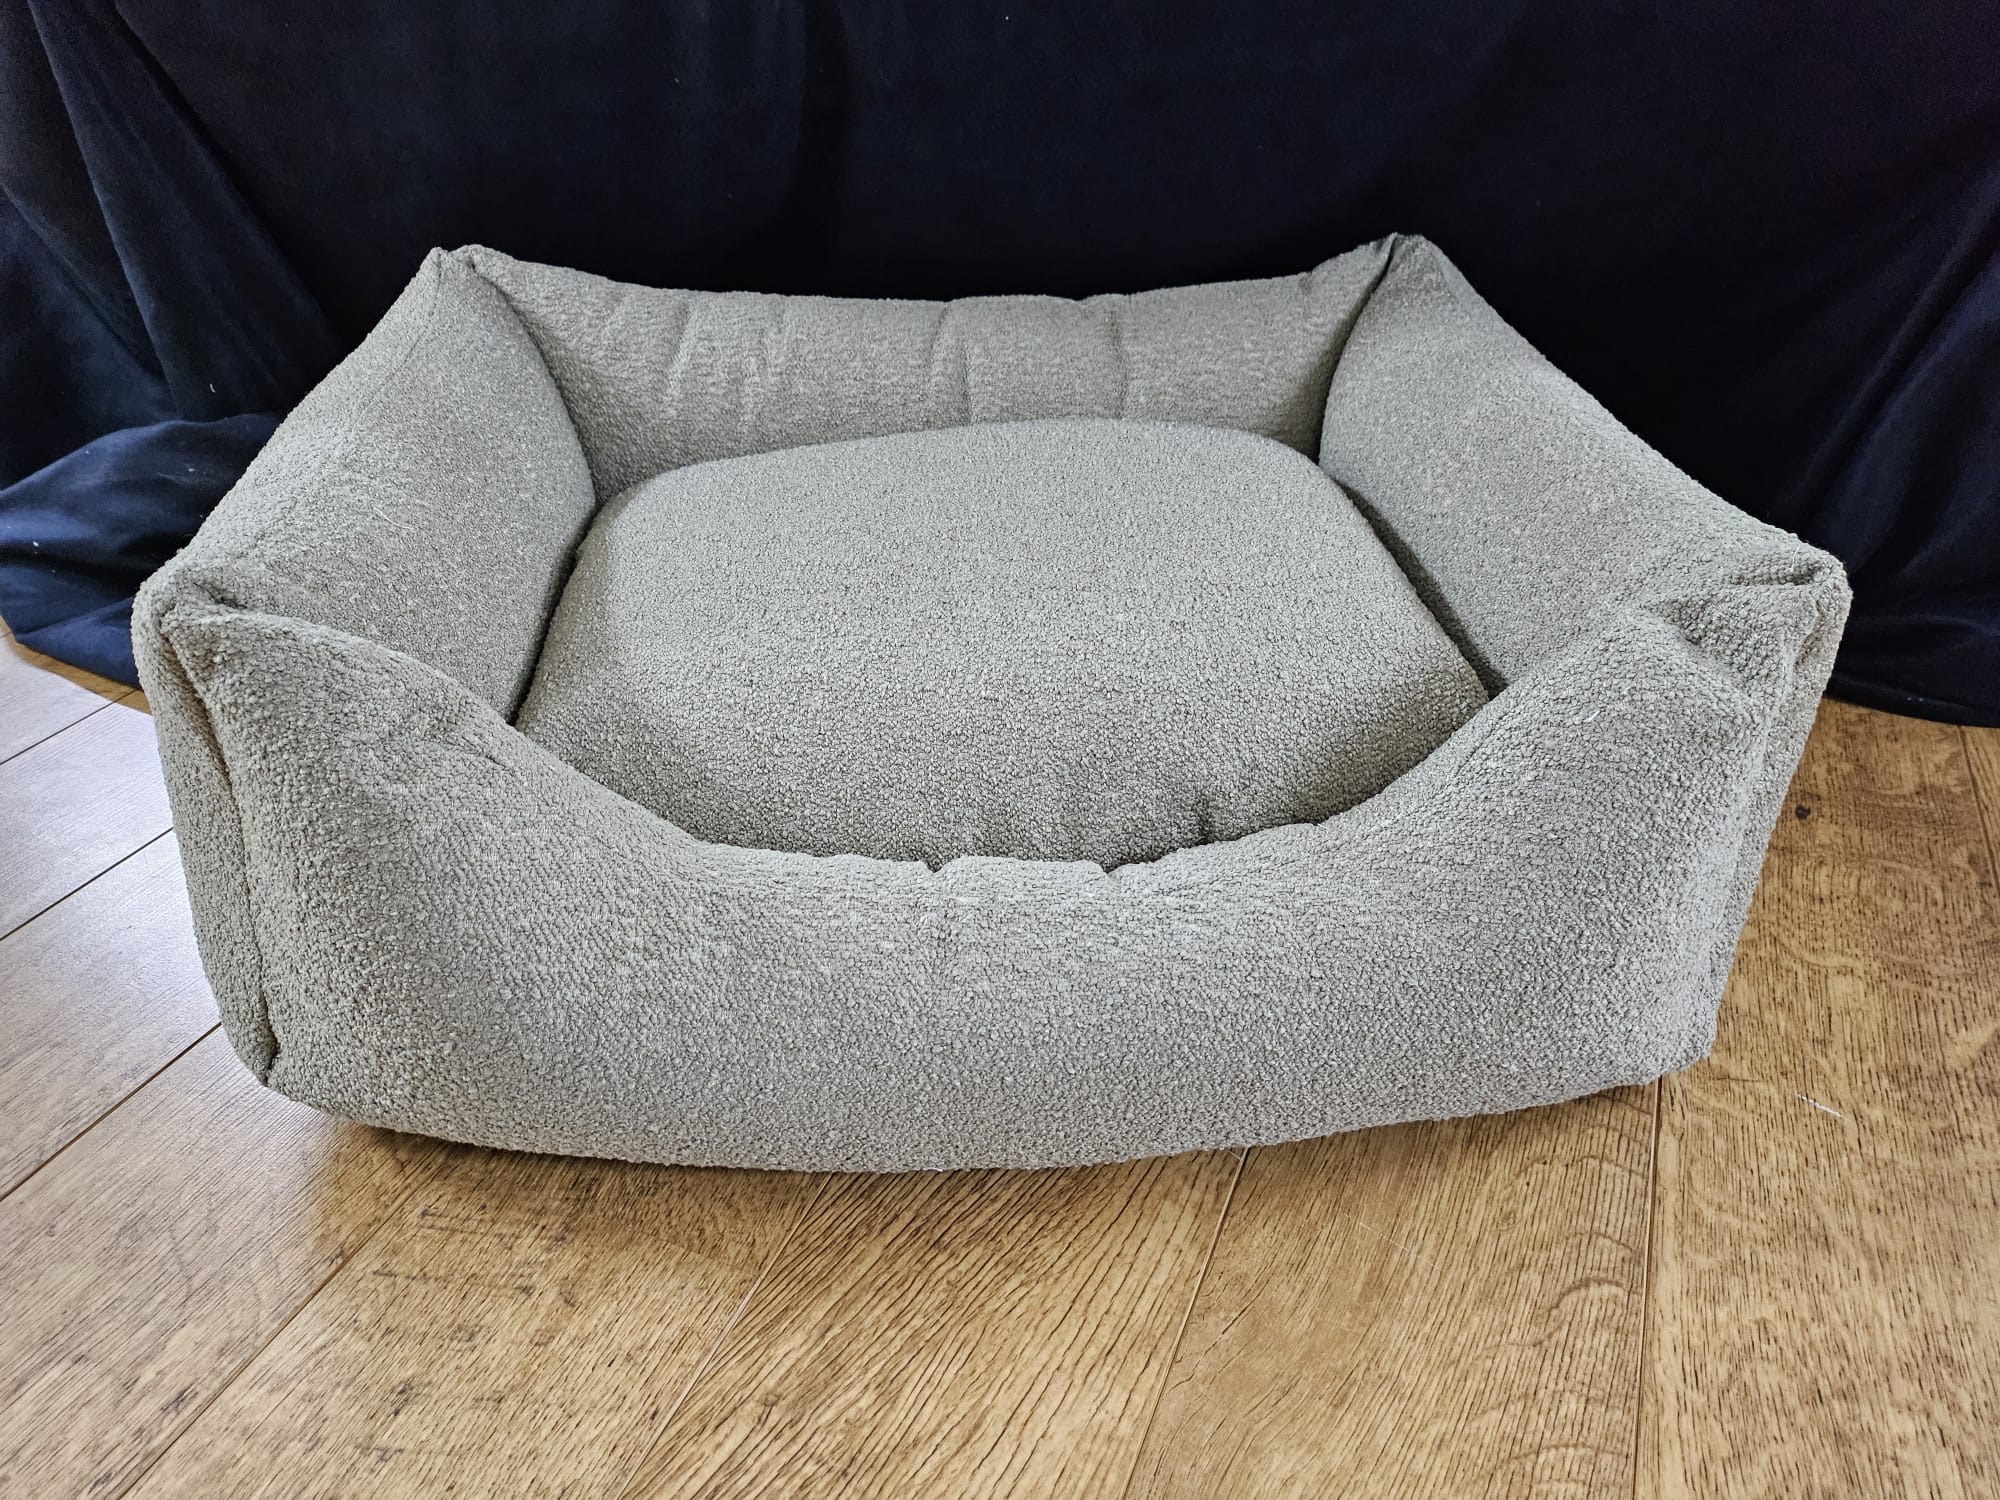 Custom Dog Beds